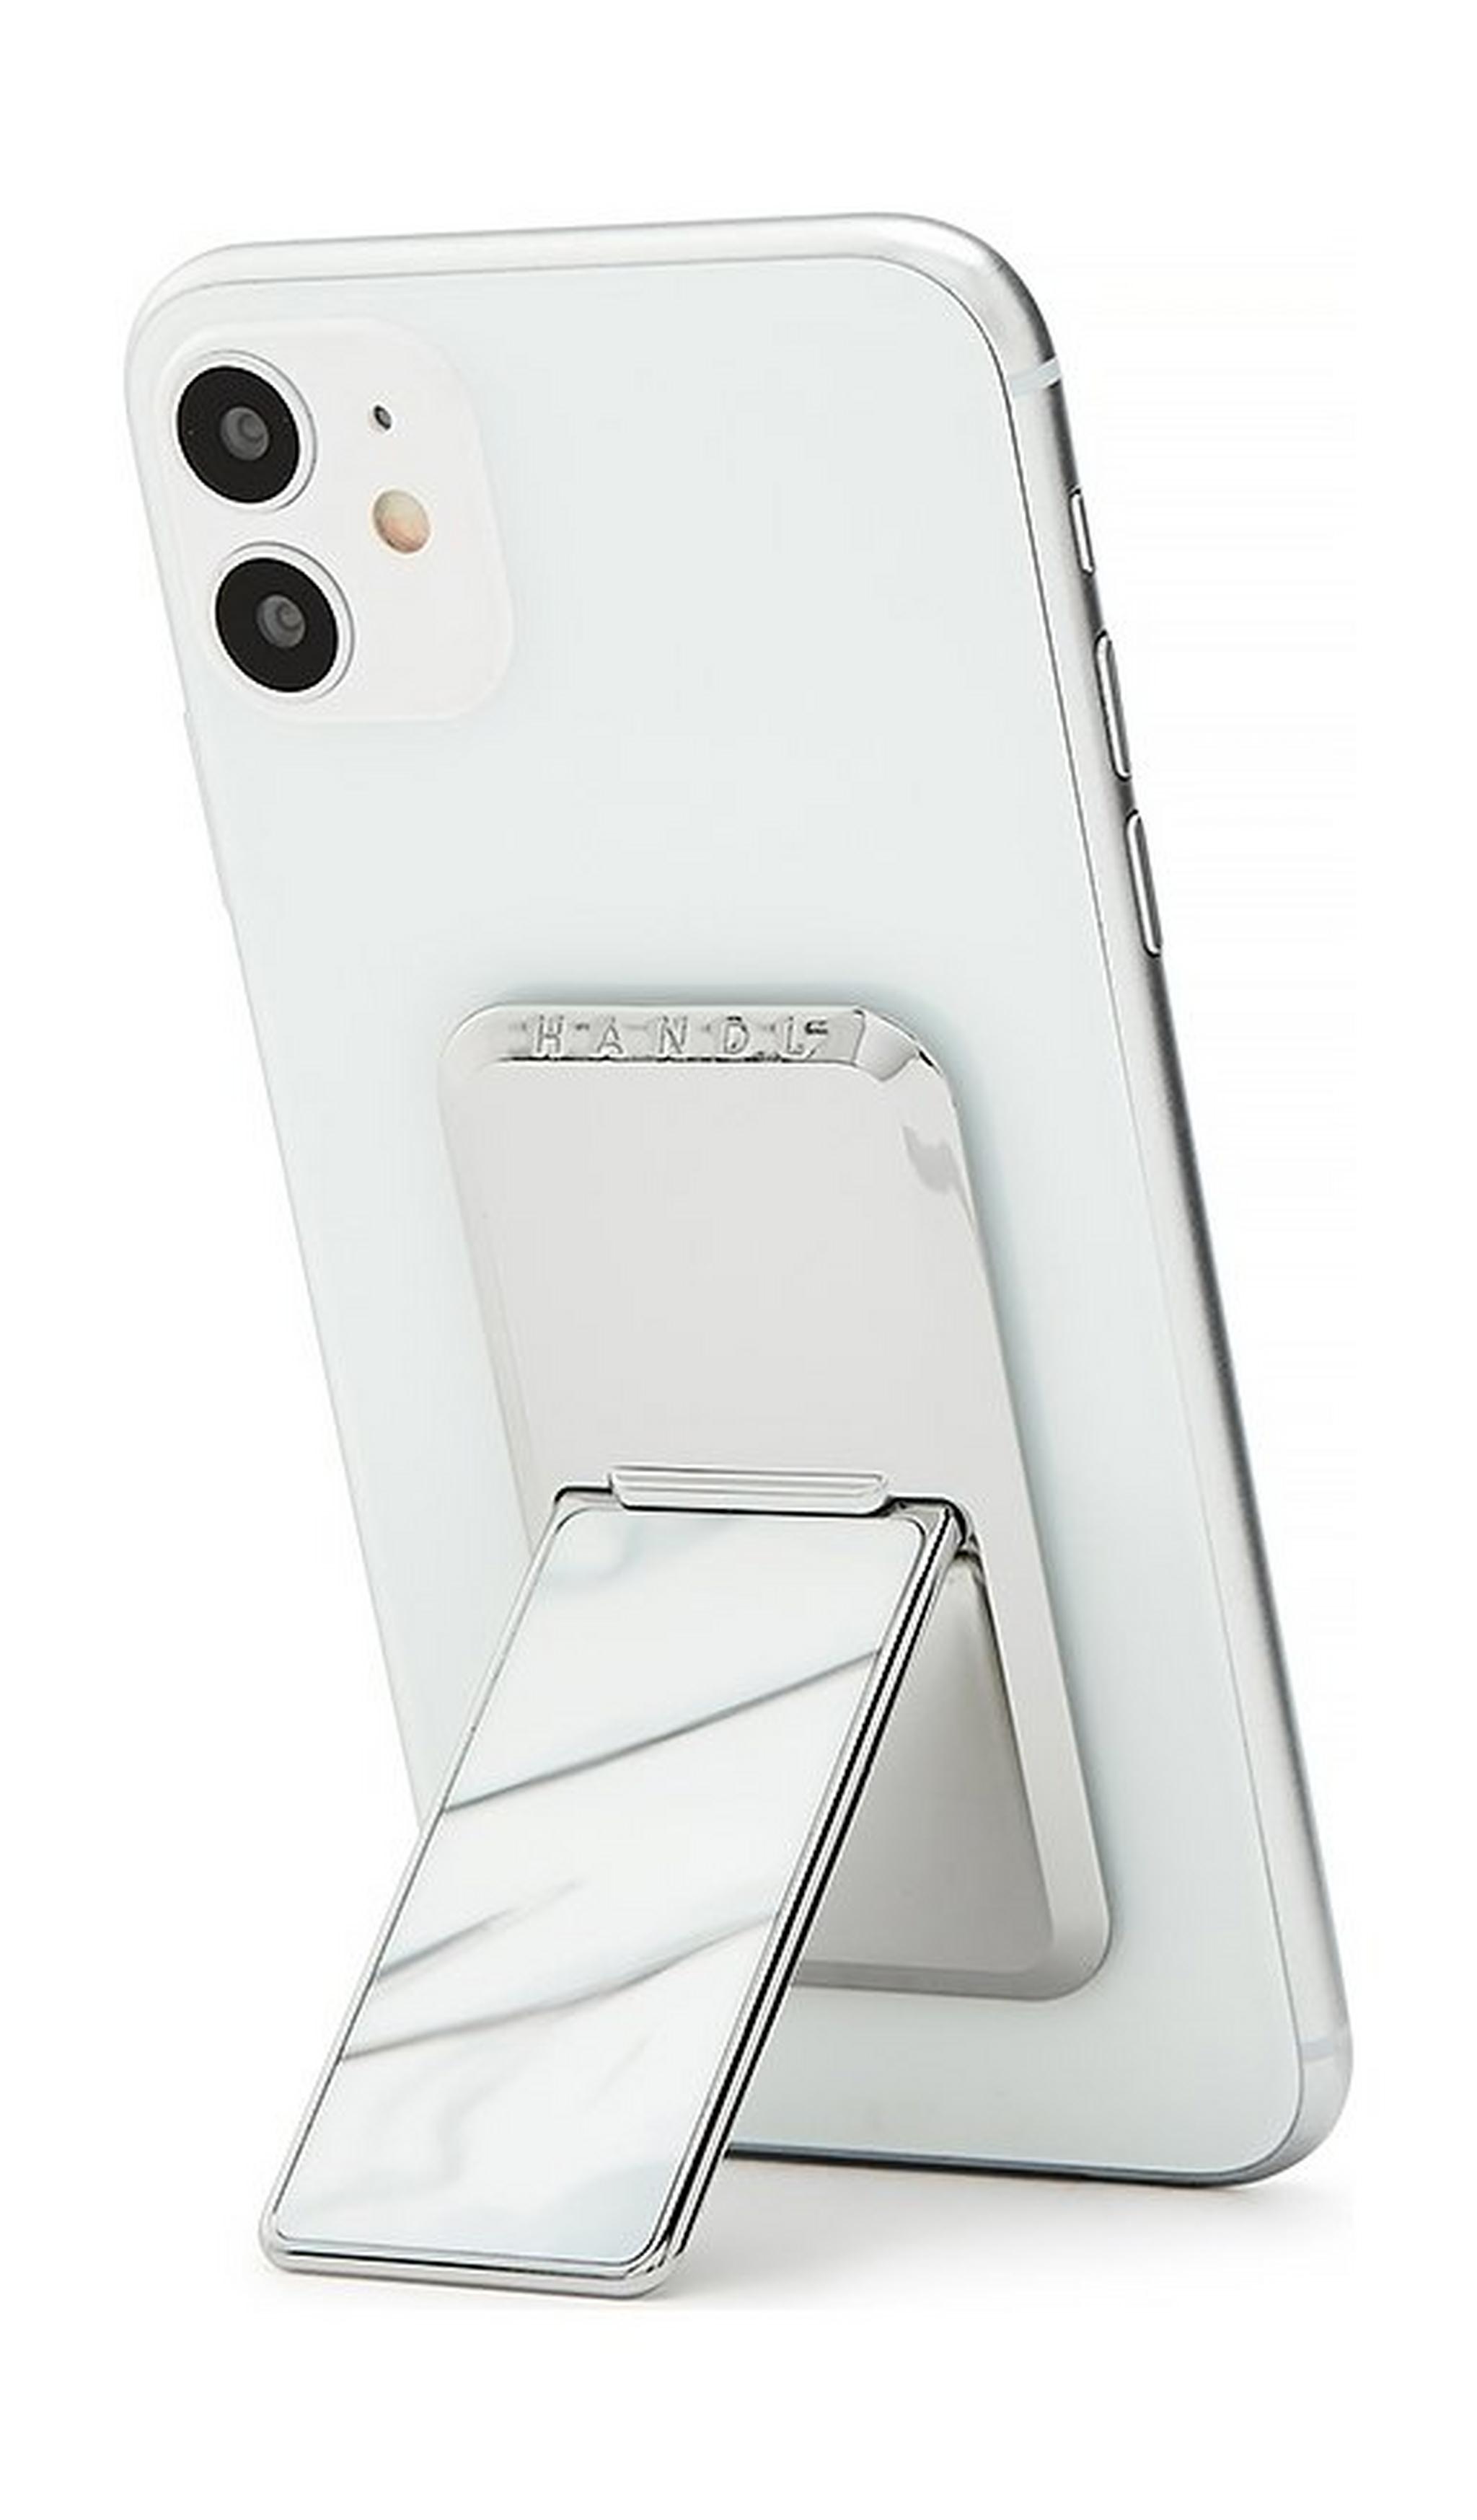 HANDLstick Marble Smartphone Holder - Silver/Marble